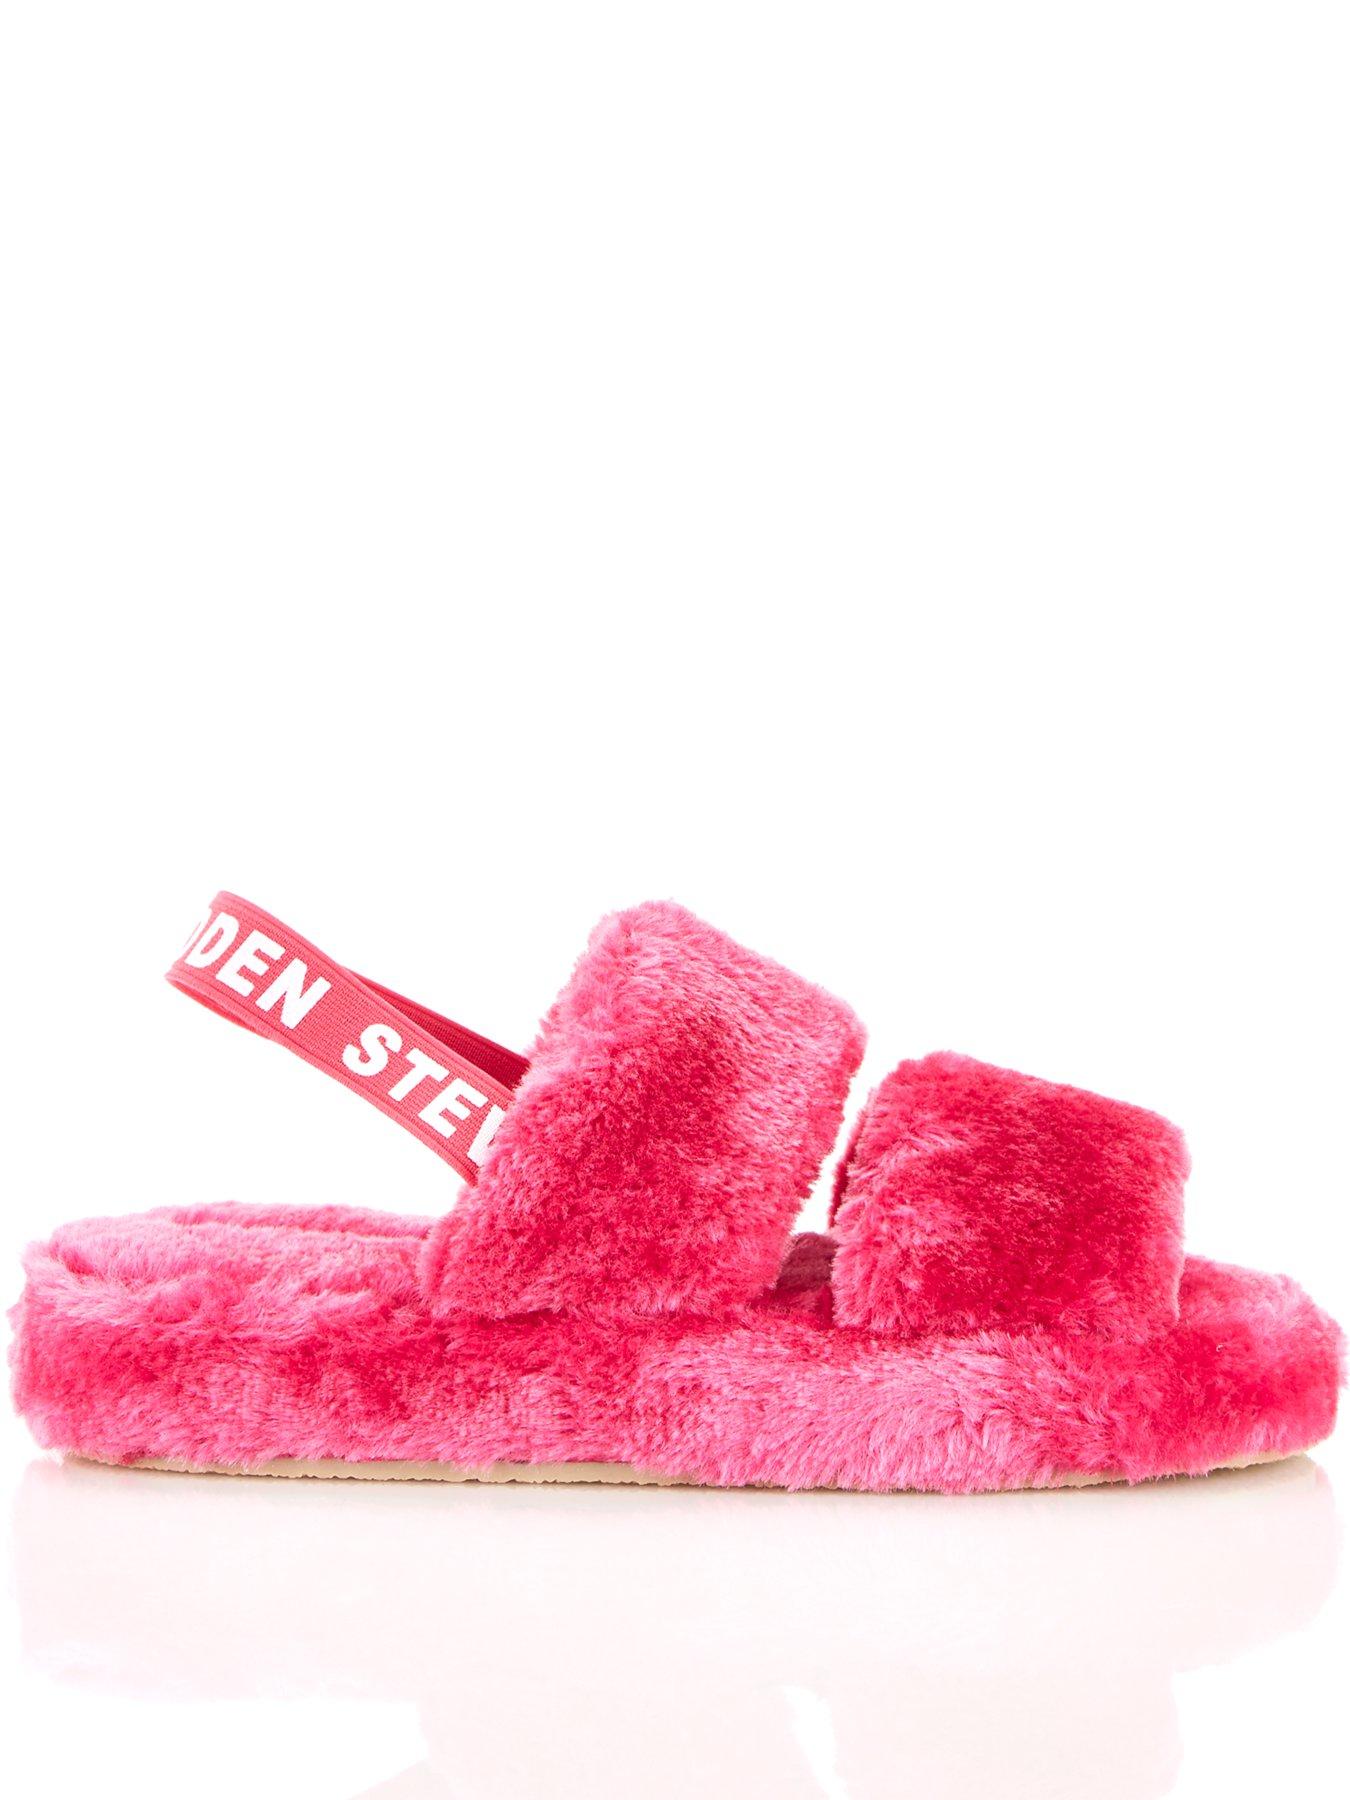 Shoes & boots Fluffy Mini Me Slipper Sandal - Hot Pink